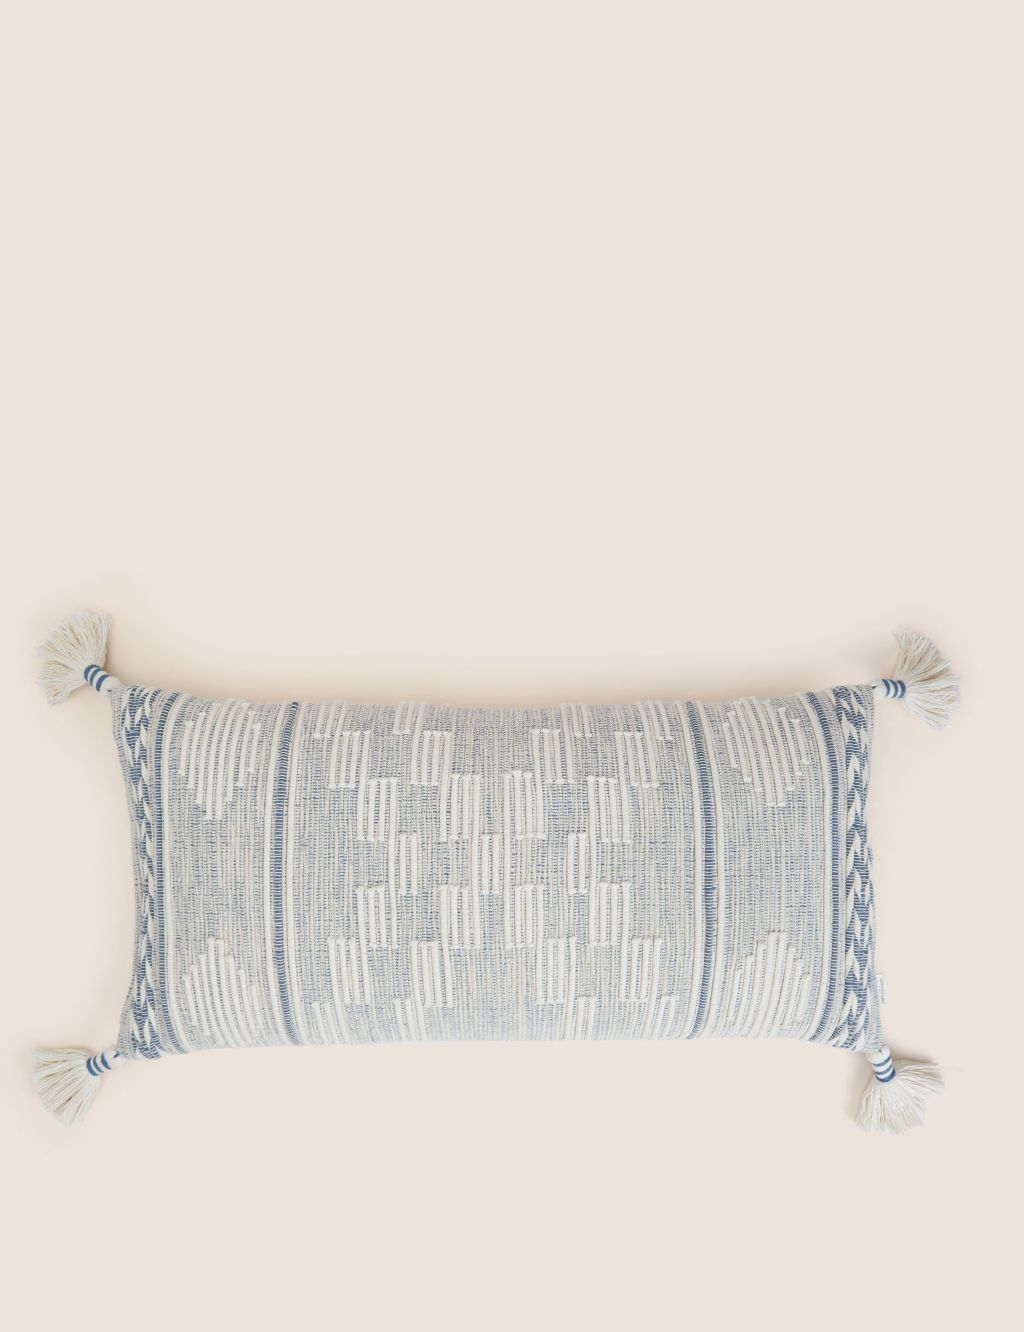 Seville Amar Large Textured Bolster Cushion